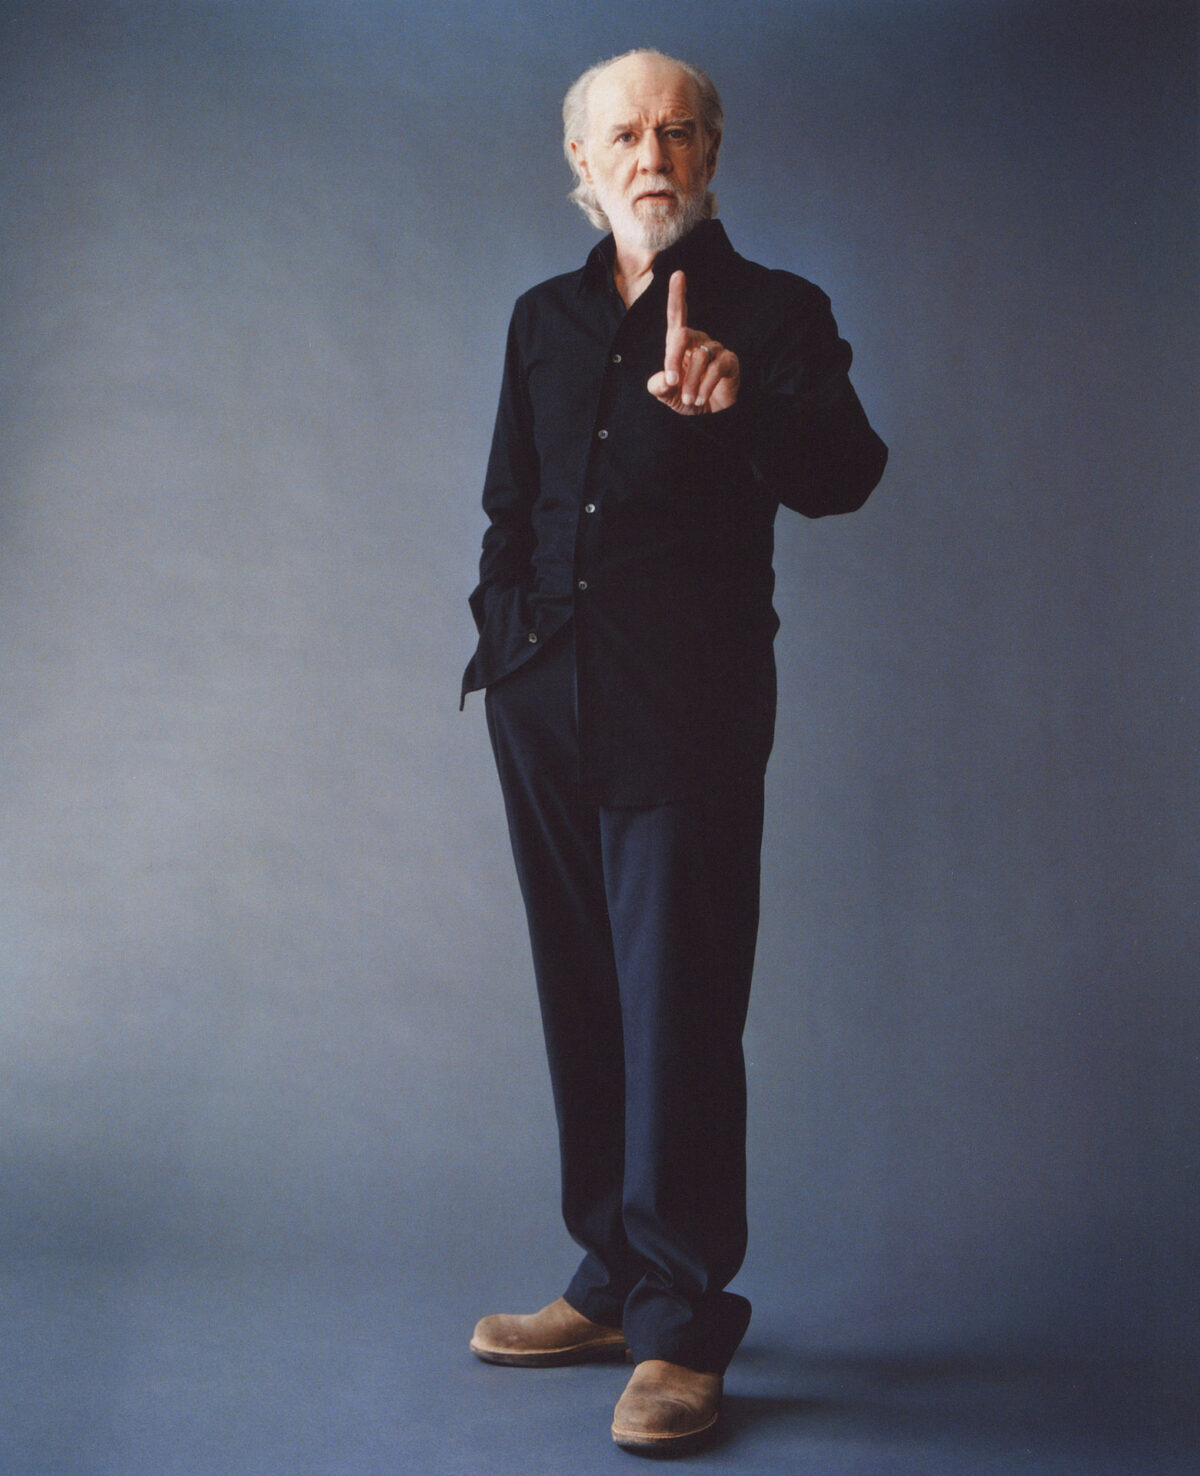 George Carlin © HBO 2022